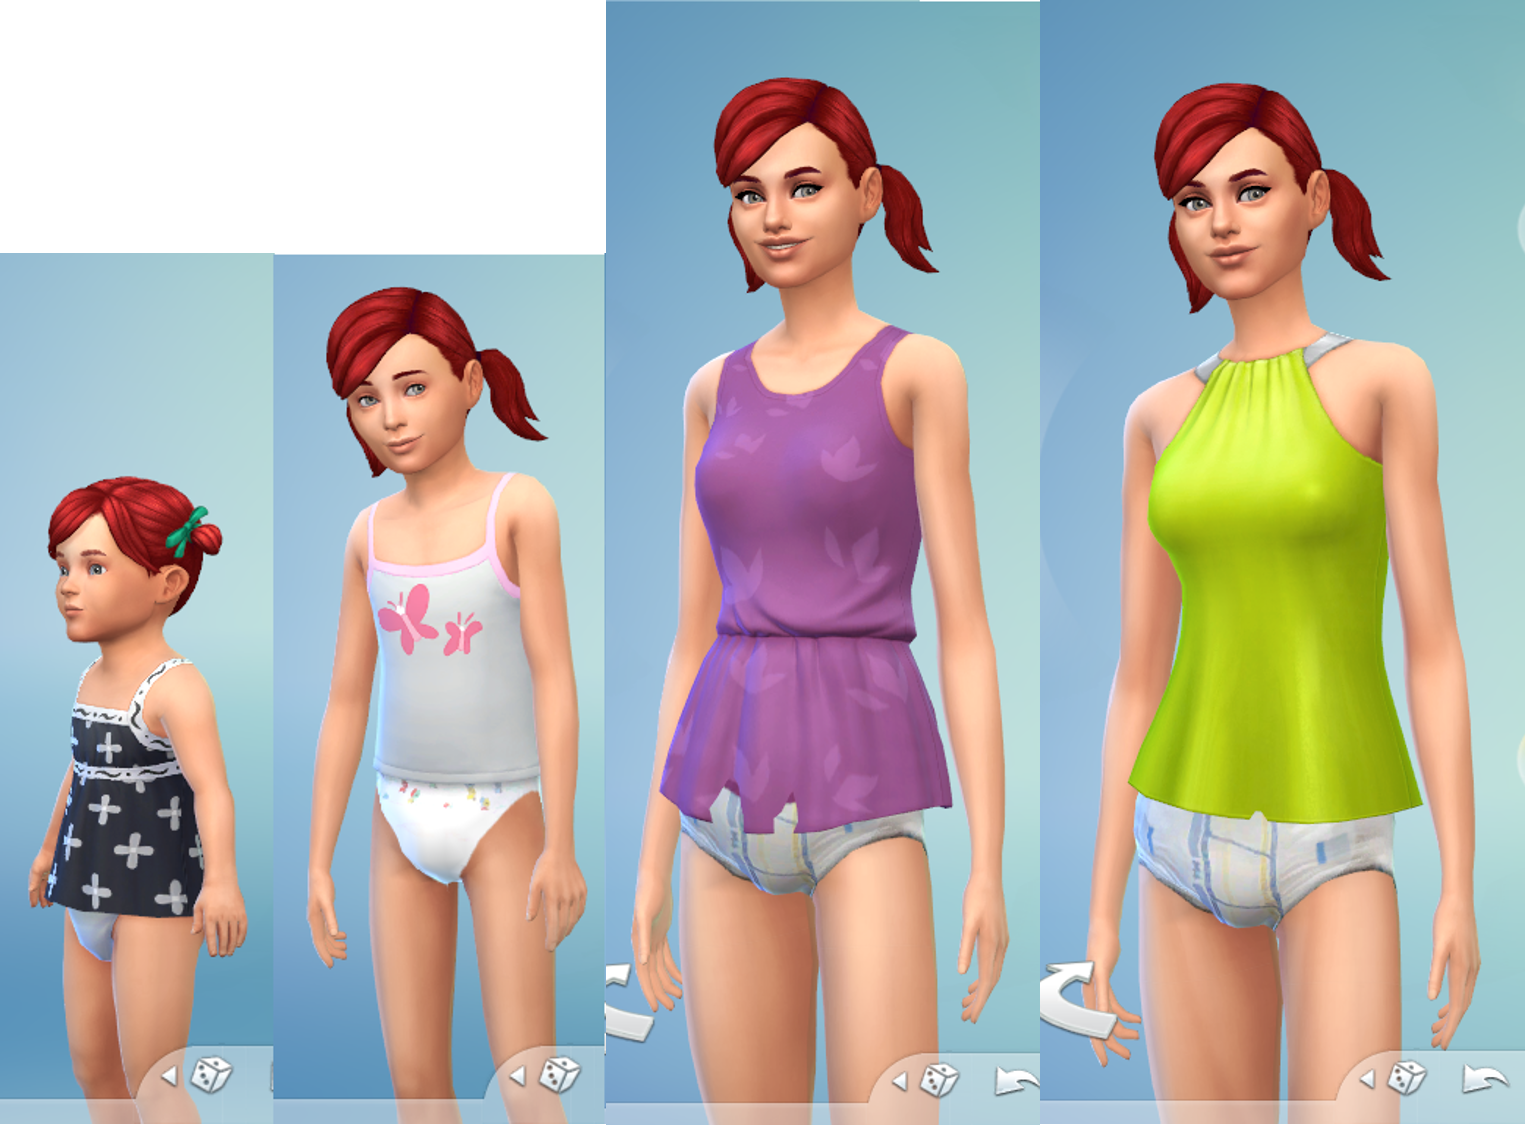 Sims 4 mods sim child. Мод abdl одежда SIMS 4. Симс 4 diaper Mod. Симс 4 abdl. SIMS 4 мод на abdl.